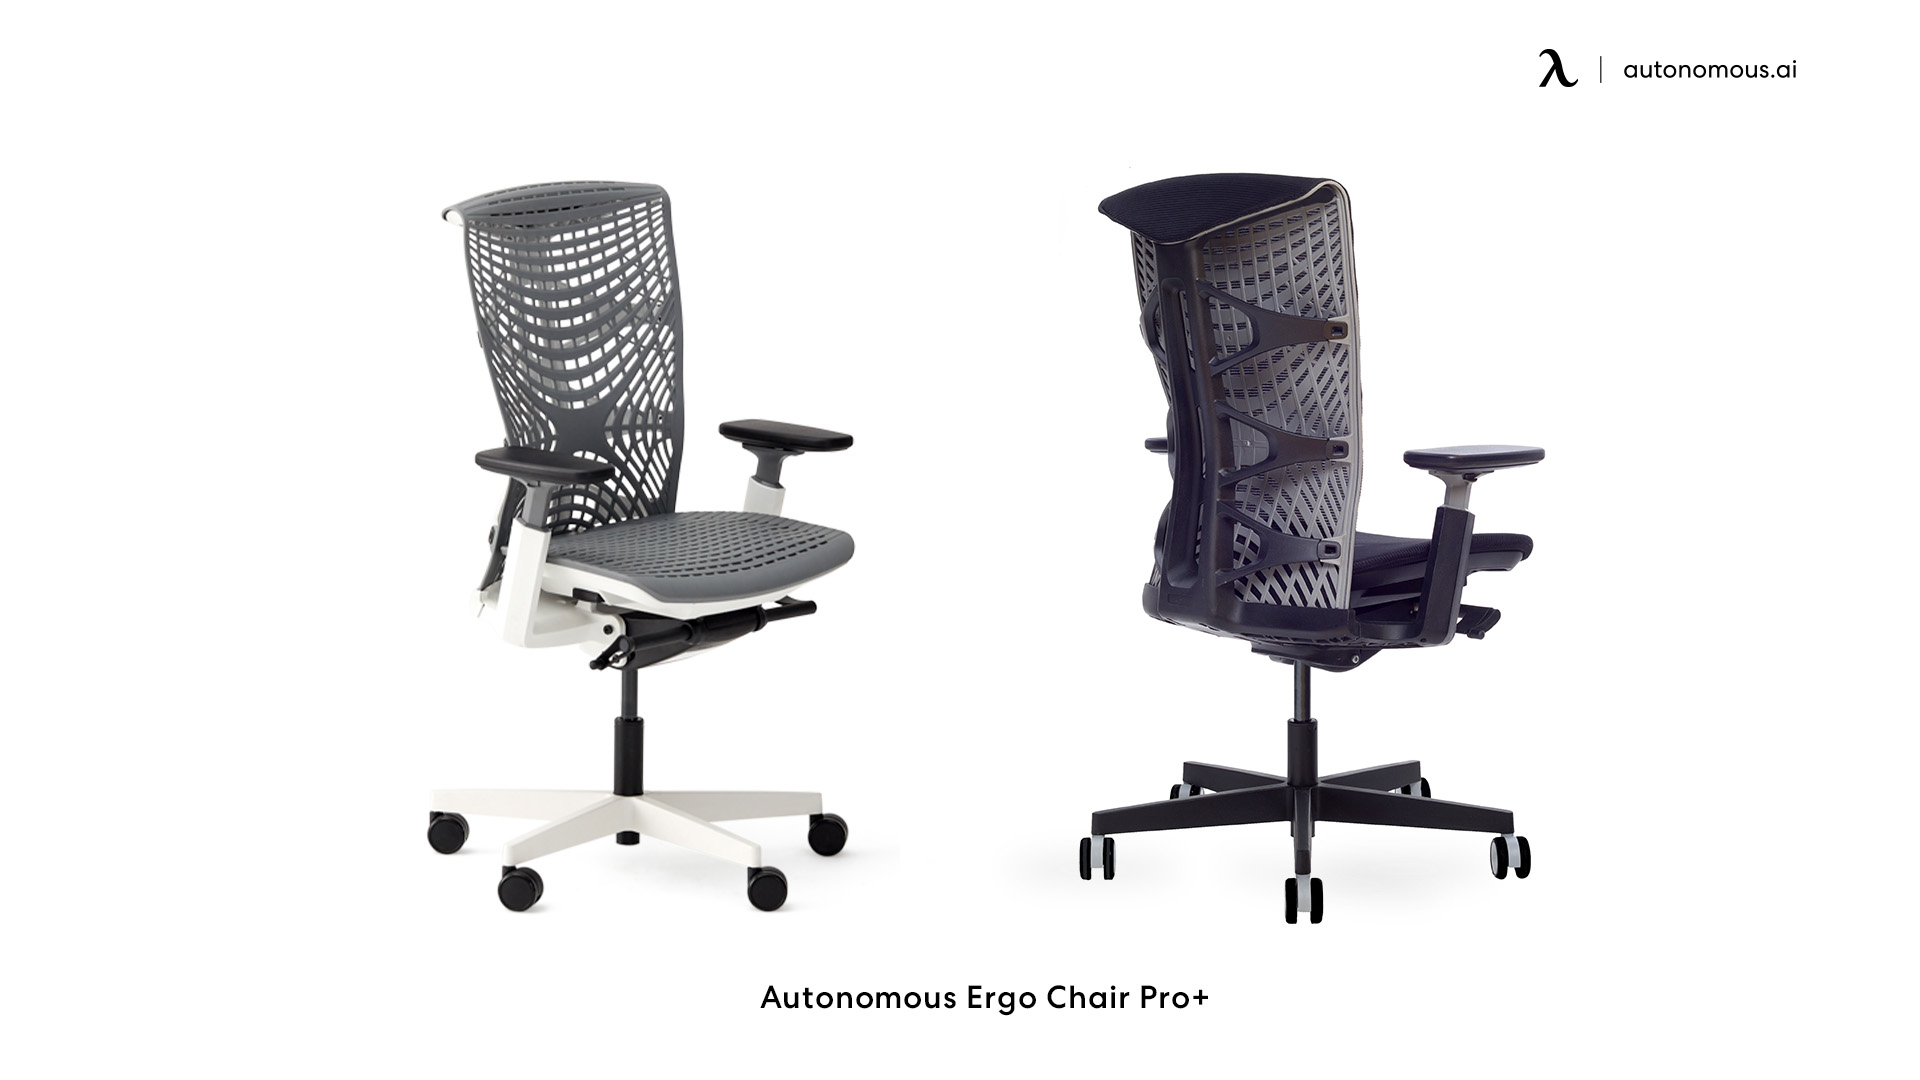 ErgoChair Pro+ aesthetic desk chair